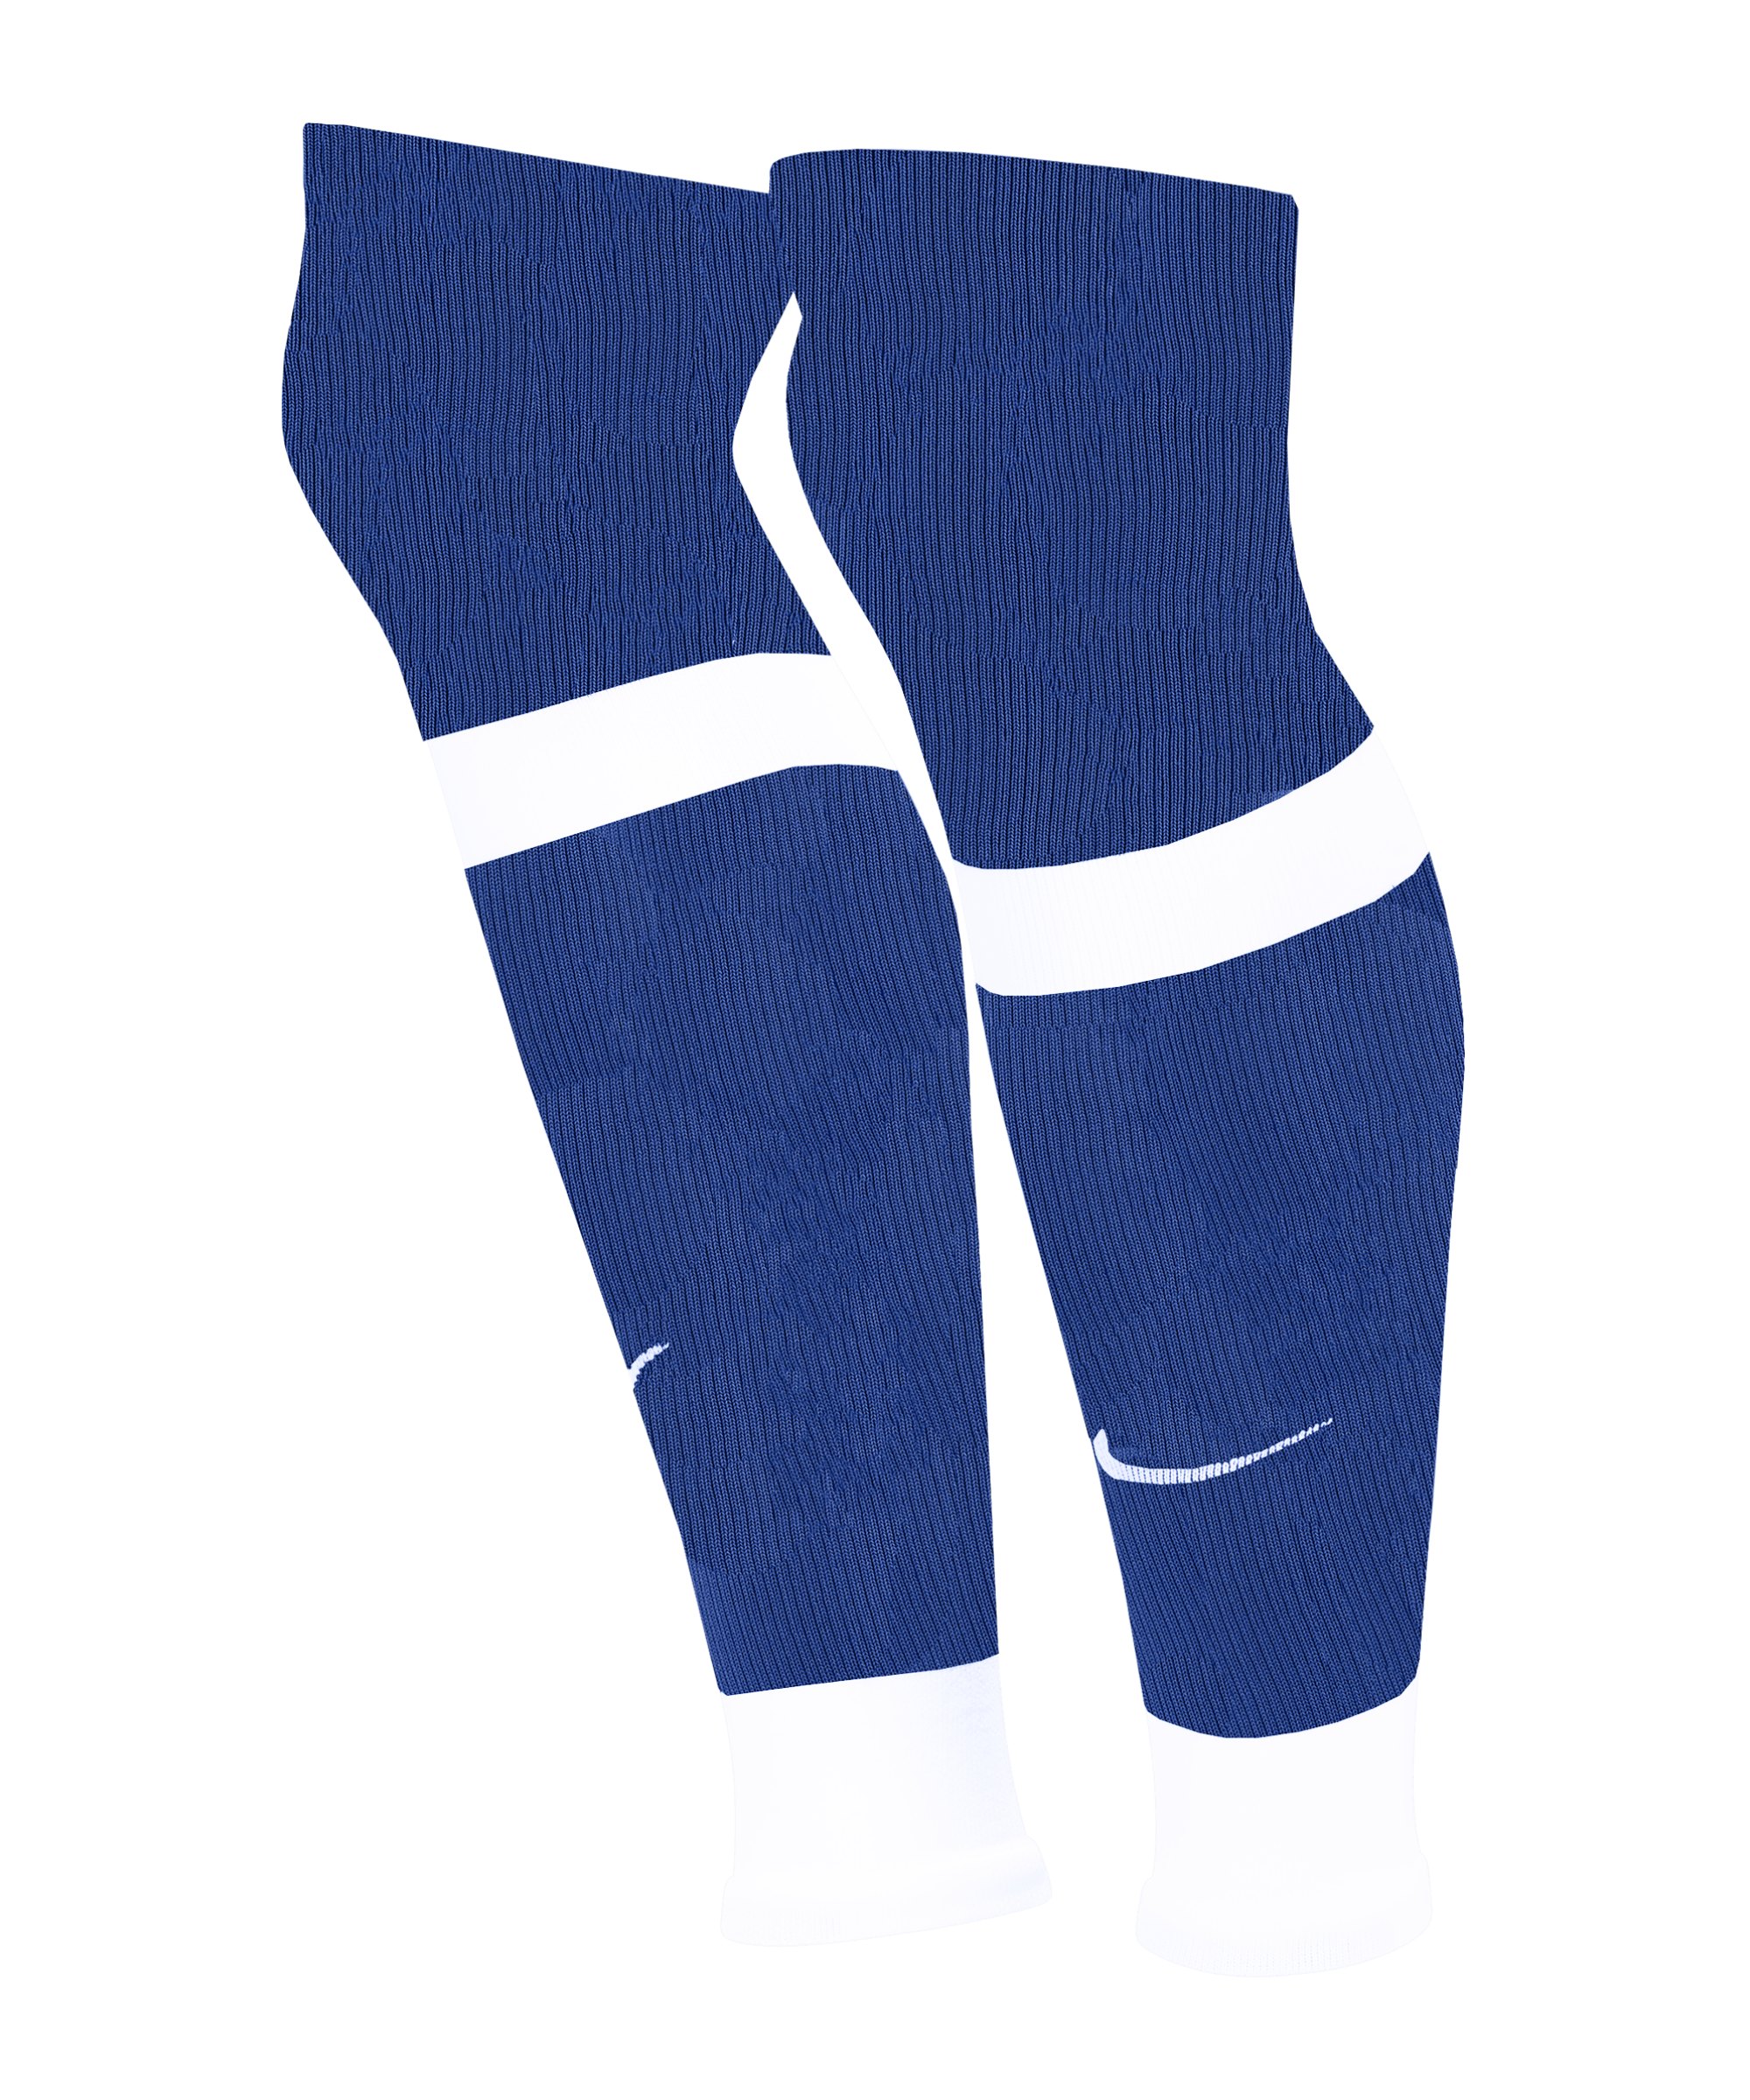 Nike MatchFit Sleeve Blau Weiss F401 - blau